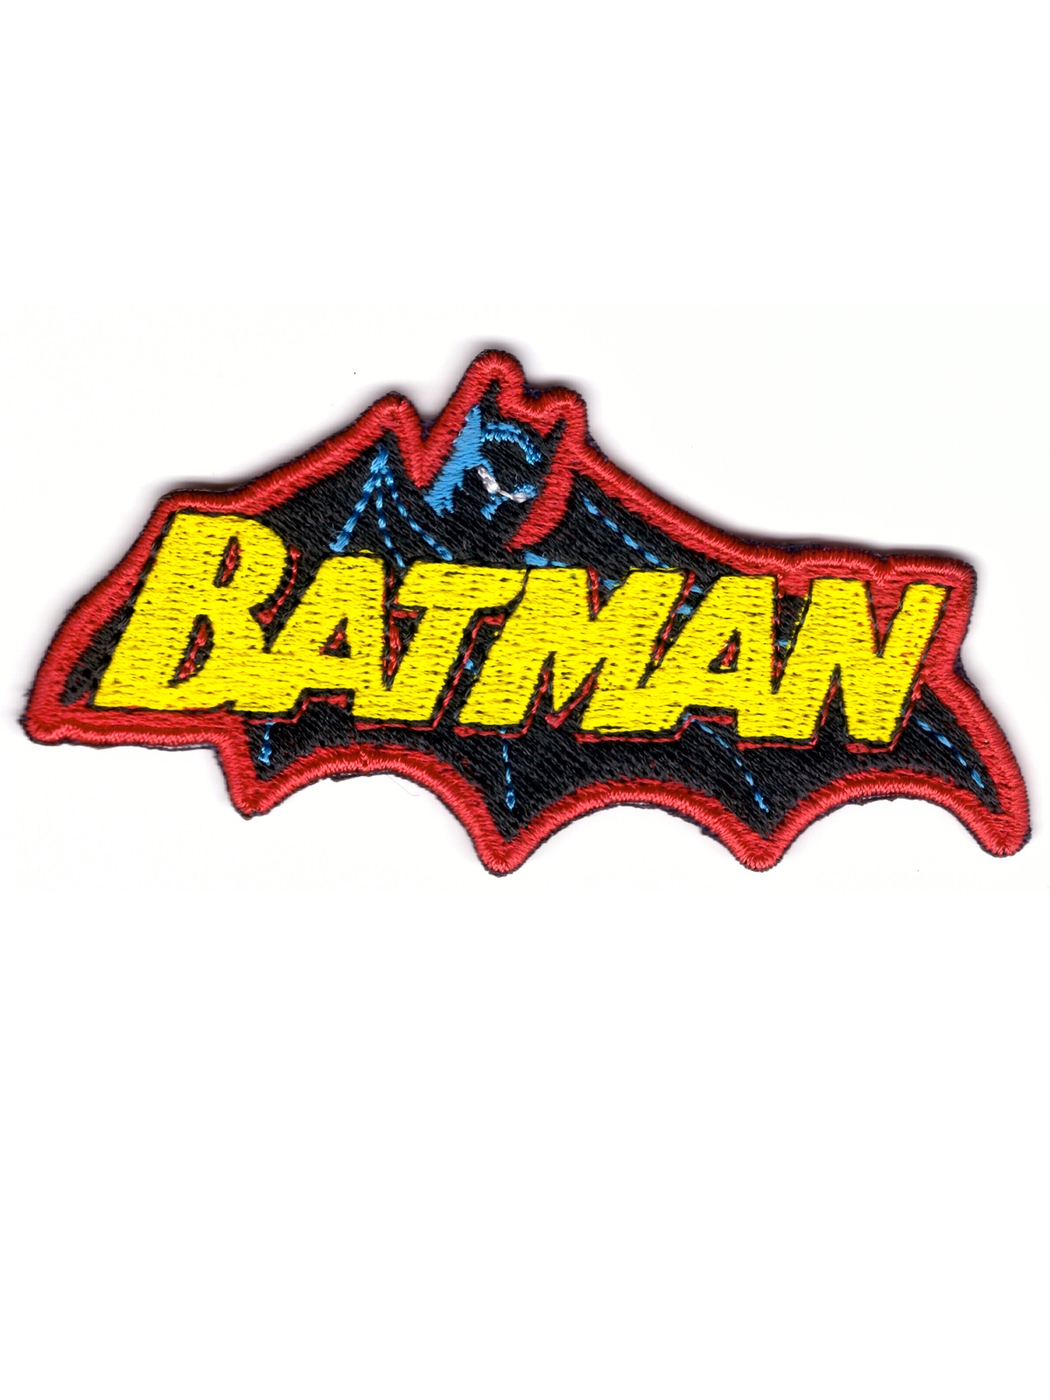 Нашивка на одежду PrioritY DC, Бэтмен/ Batman